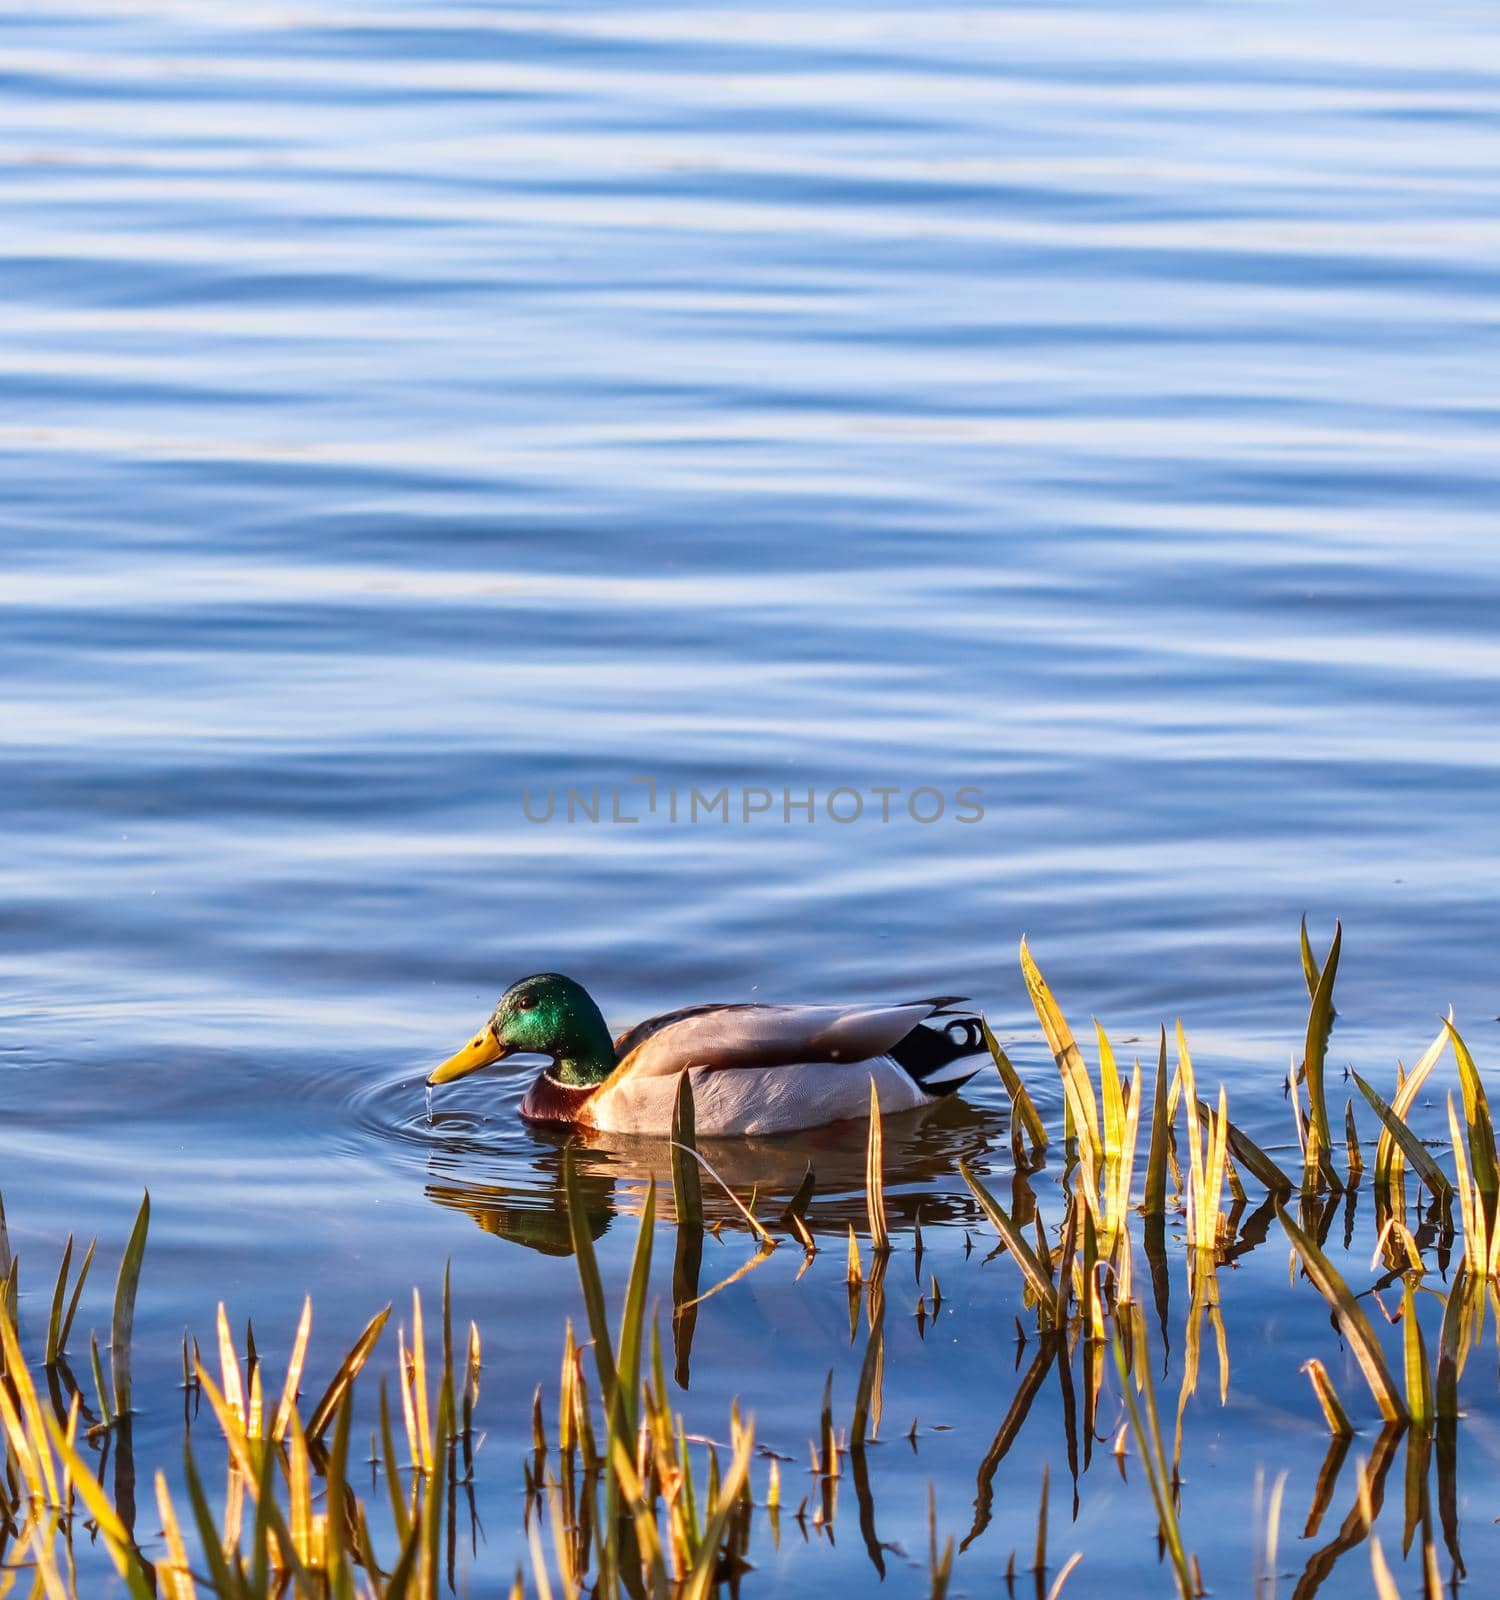 Drake, Mallard duck (Anas platyrhynchos) swimming near plants on a lake